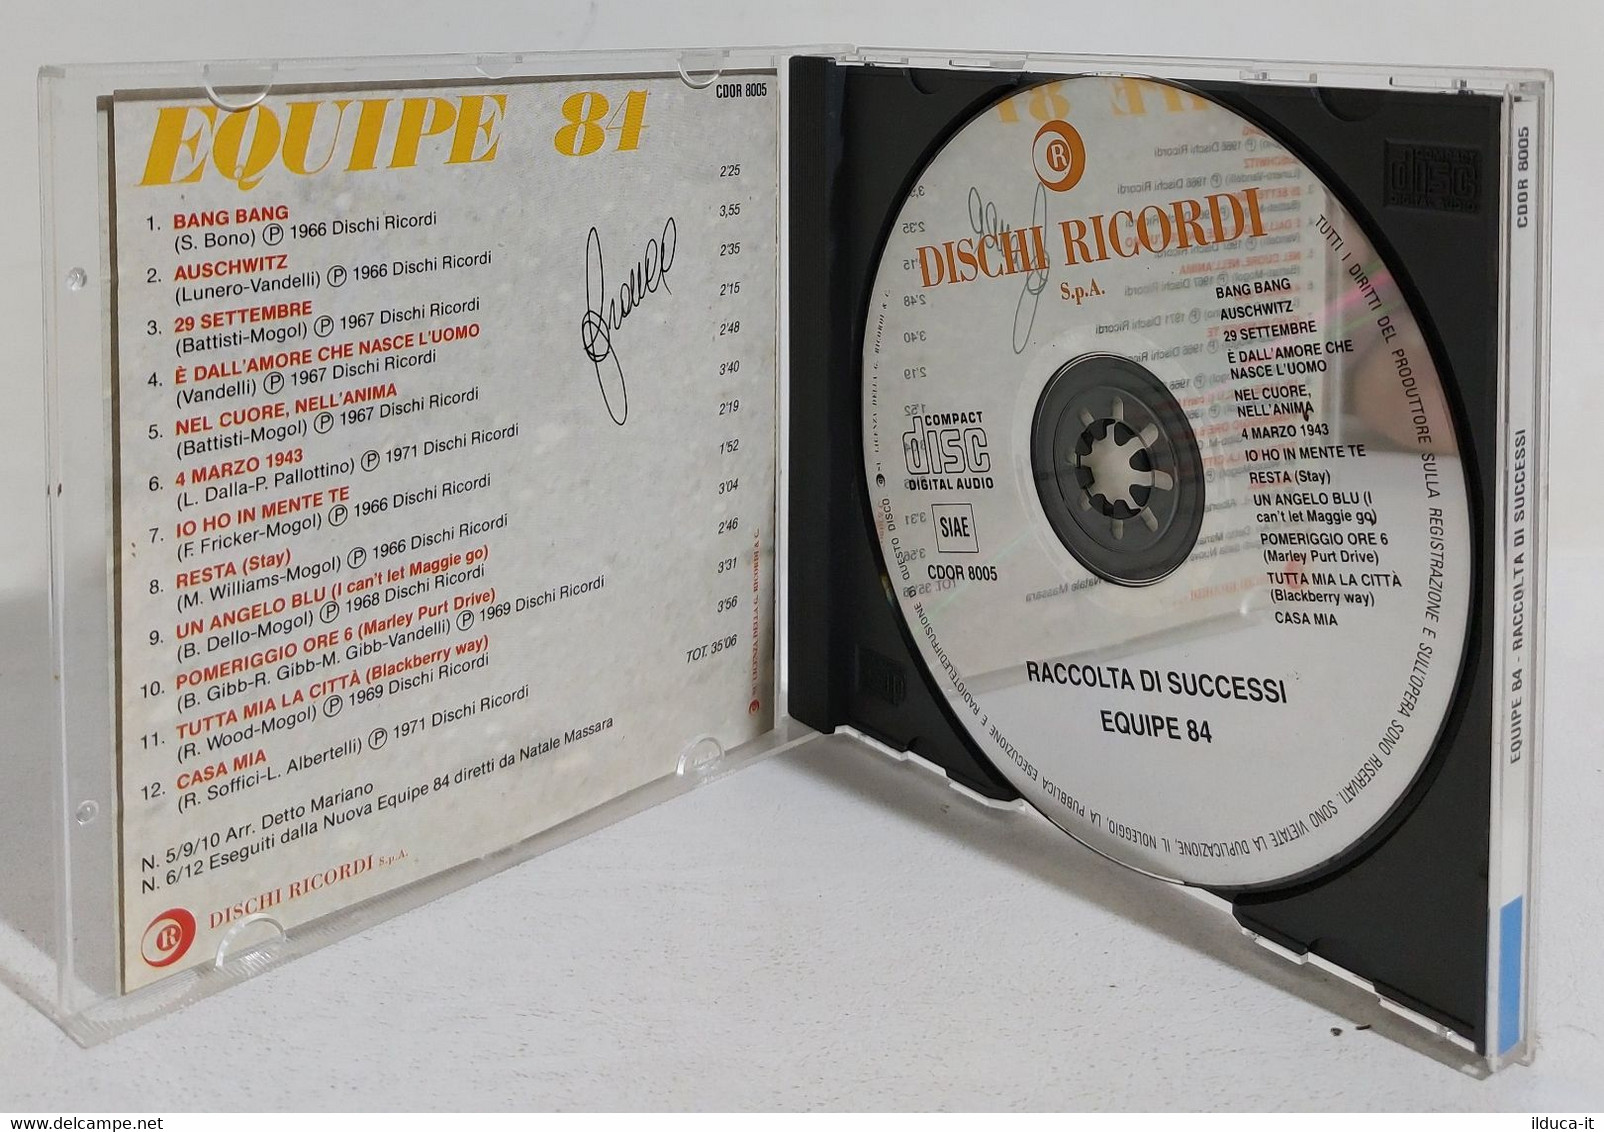 I107913 CD - Equipe 84 - Raccolta Di Successi - Ricordi - Other - Italian Music